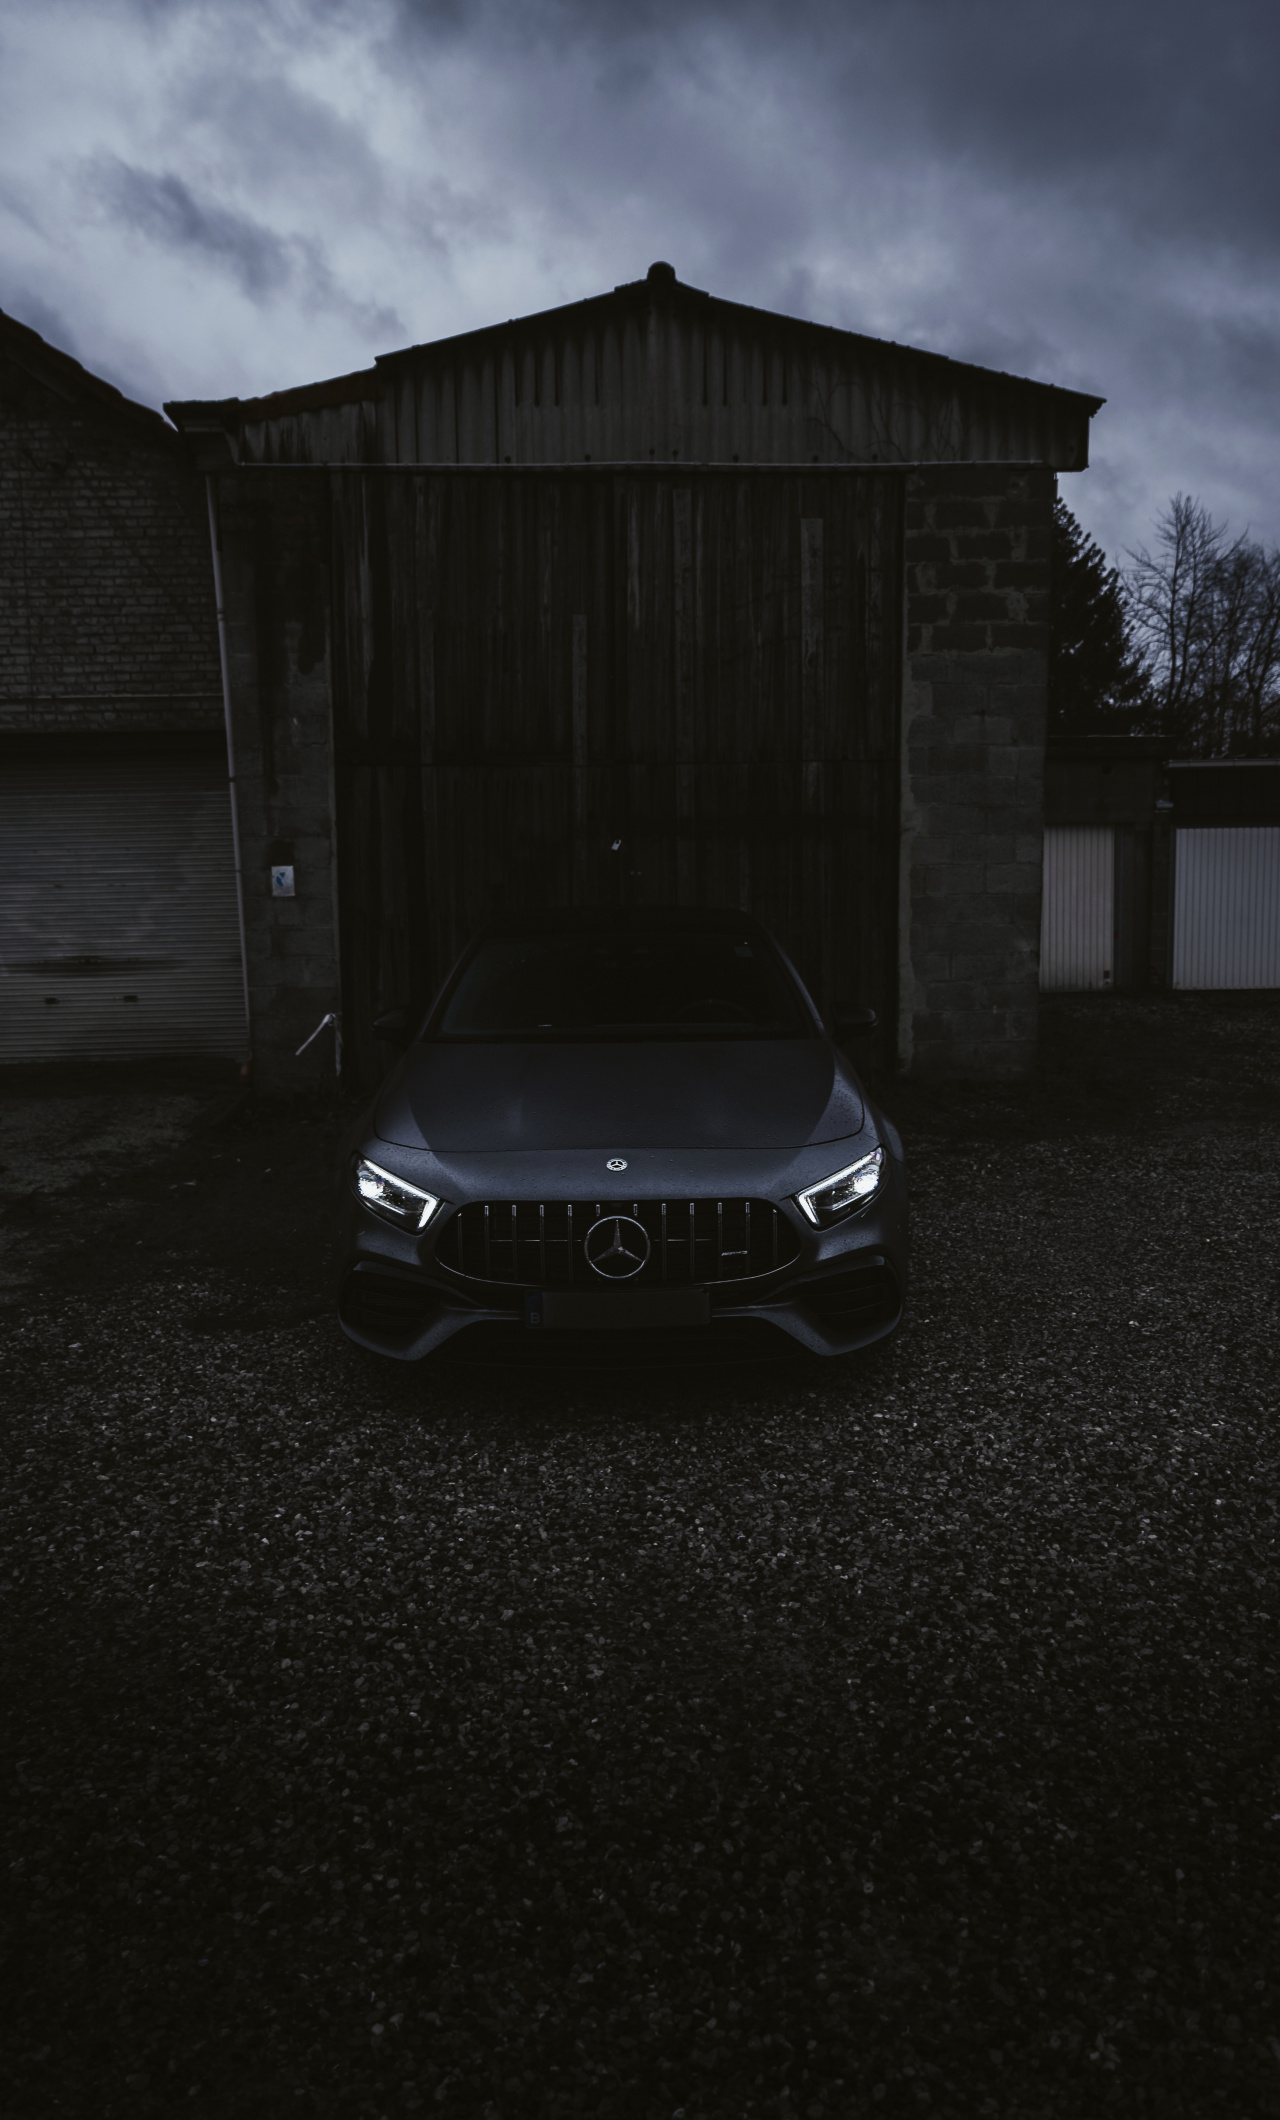 Download Black Car, Mercedes AMG GT Wallpaper, 1280x IPhone 6 Plus